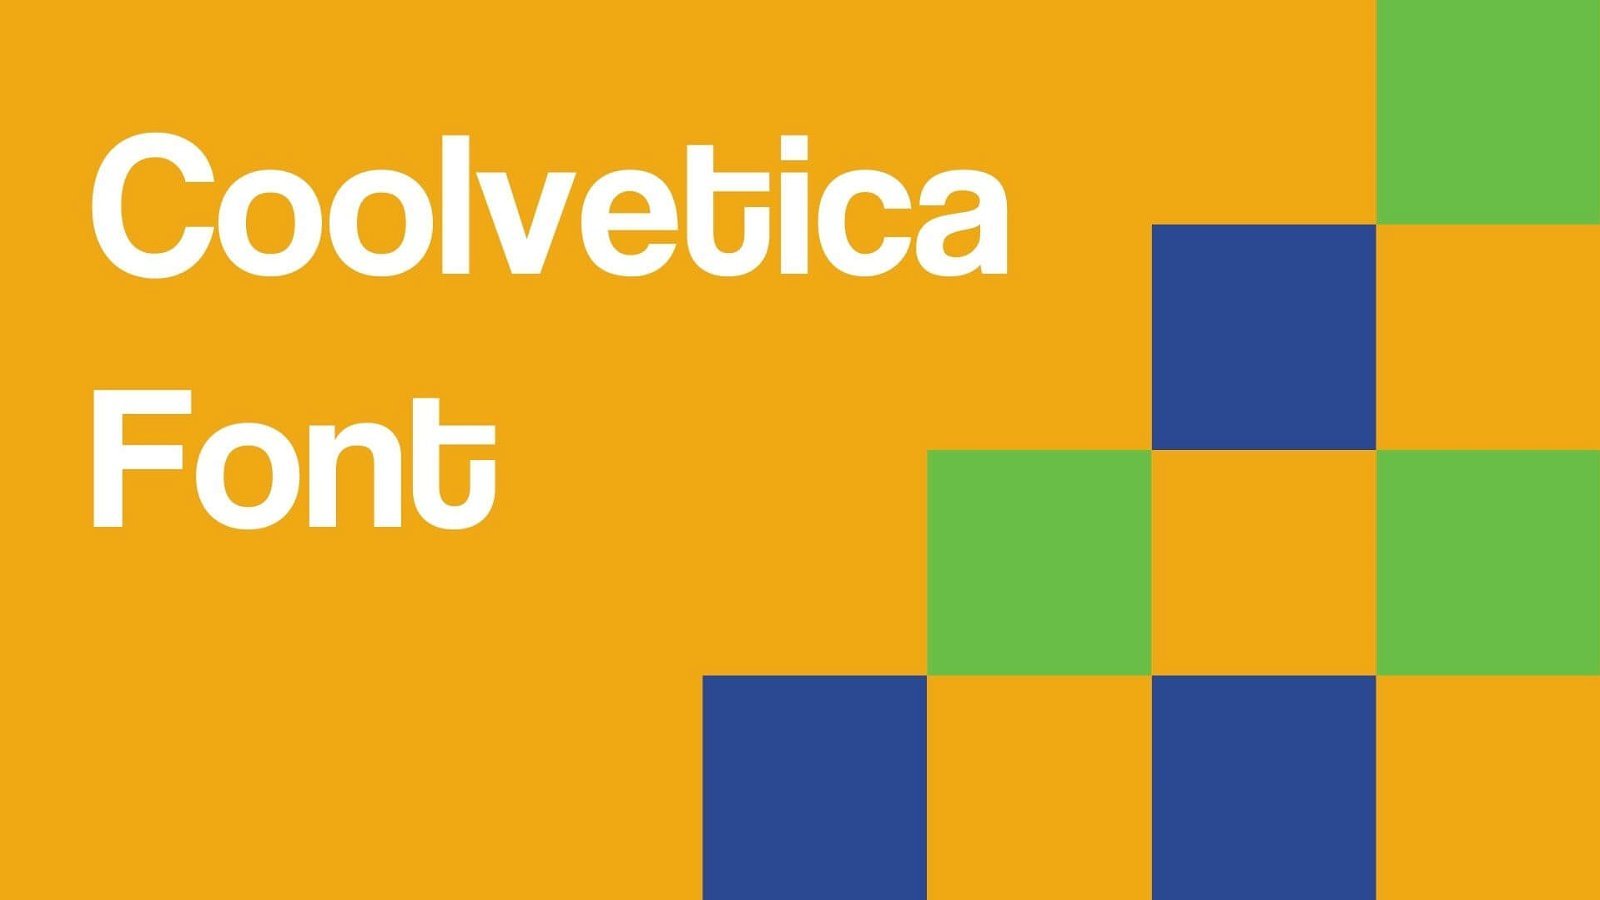 Coolvetica Font